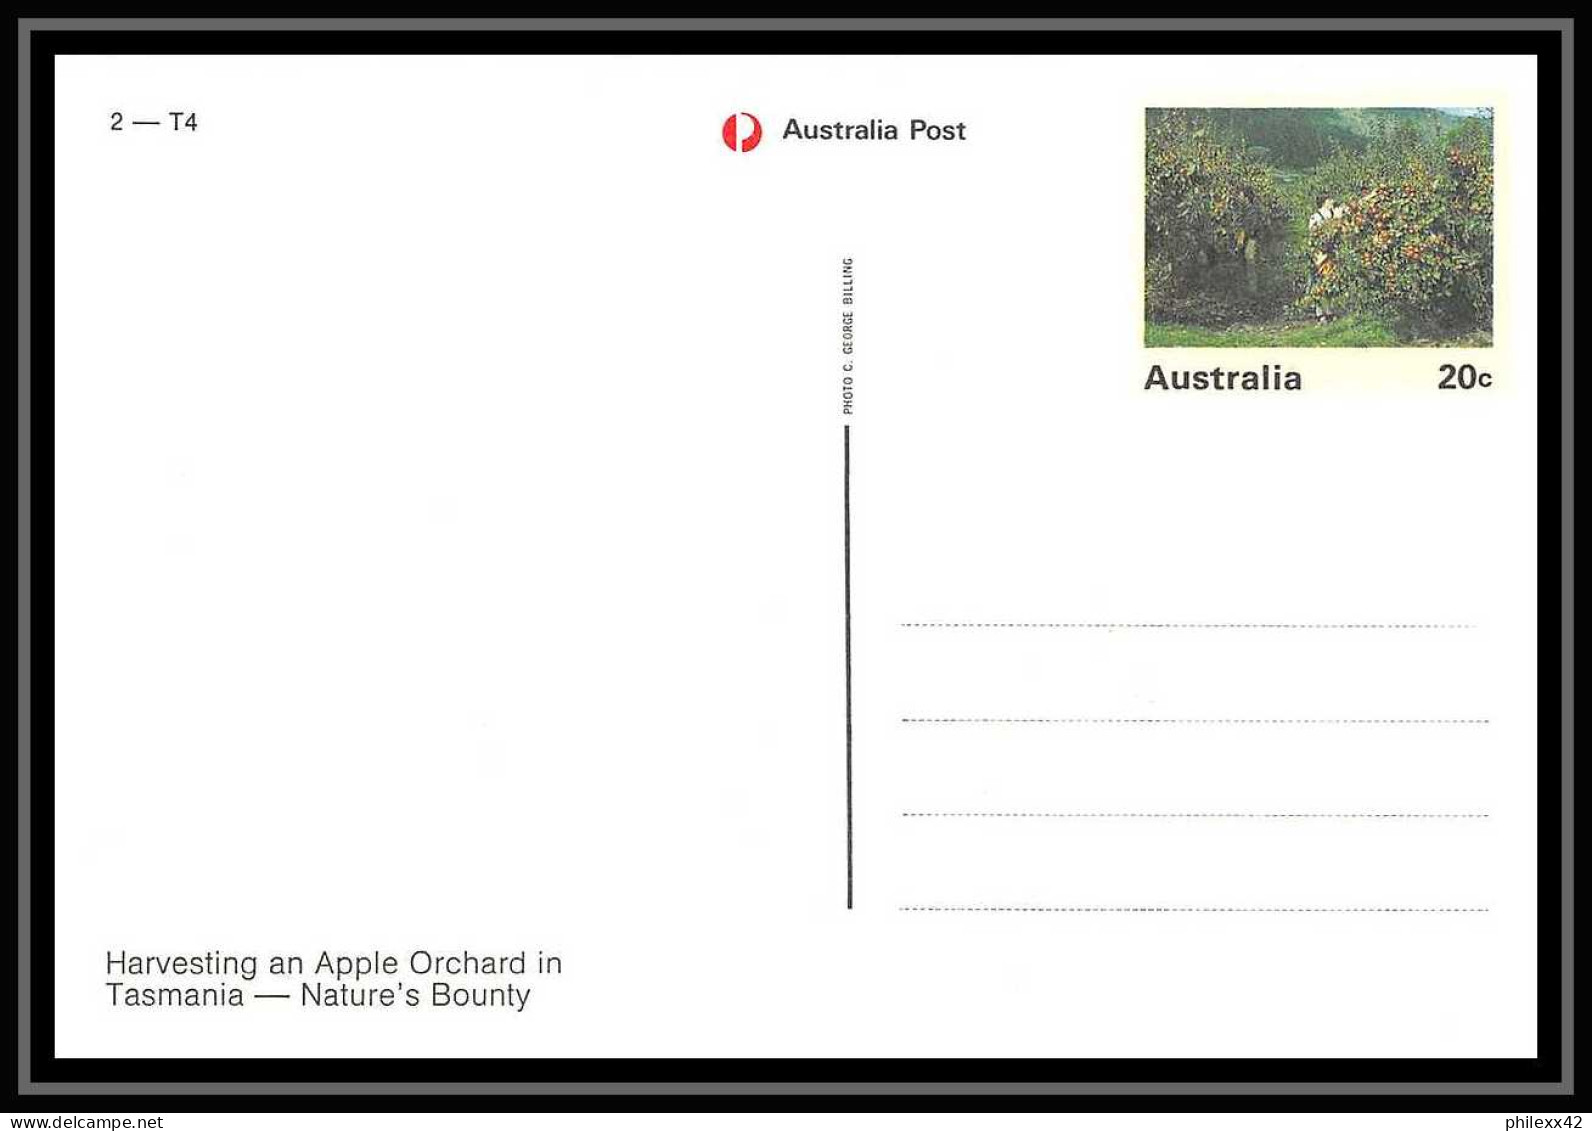 4677 animals 41 carte postale pre stamped postcards serie 2 + housse Australie australia Entier postal Stationery